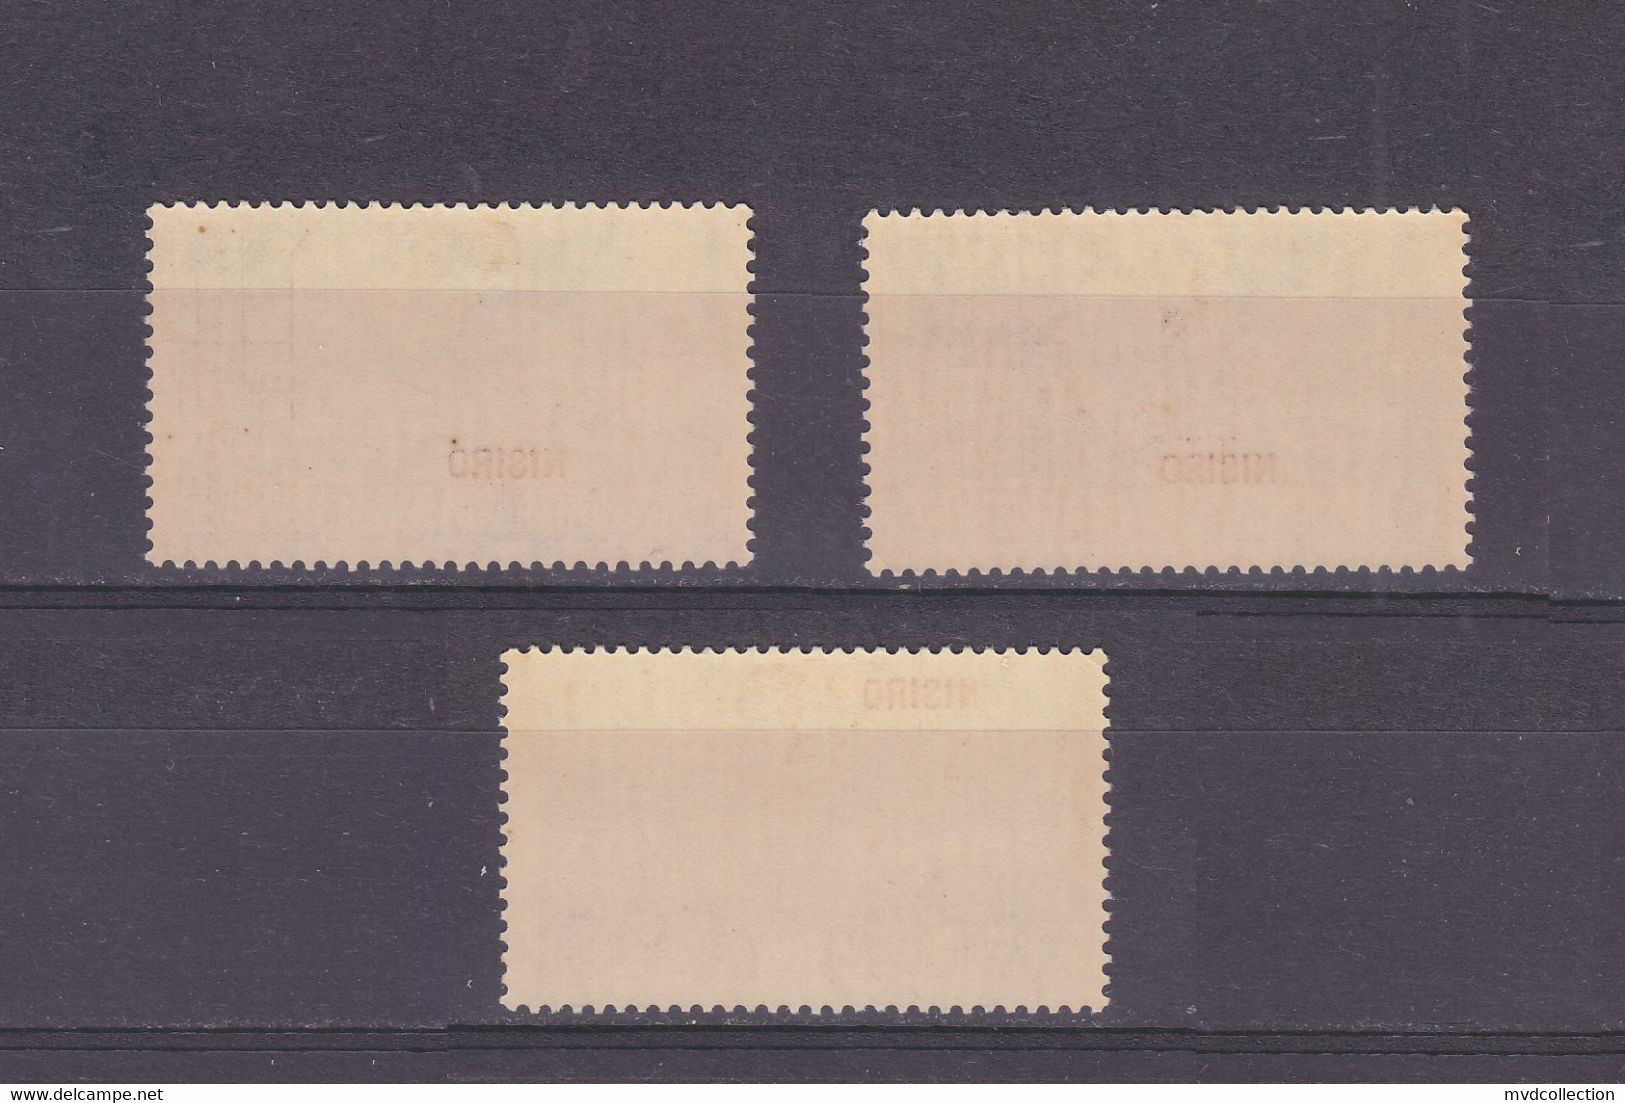 ITALY Lot CENTENARIO FERRUCCI Stamps Overprinted NISIRO 1930 VF MH Original Gum - Aegean (Nisiro)